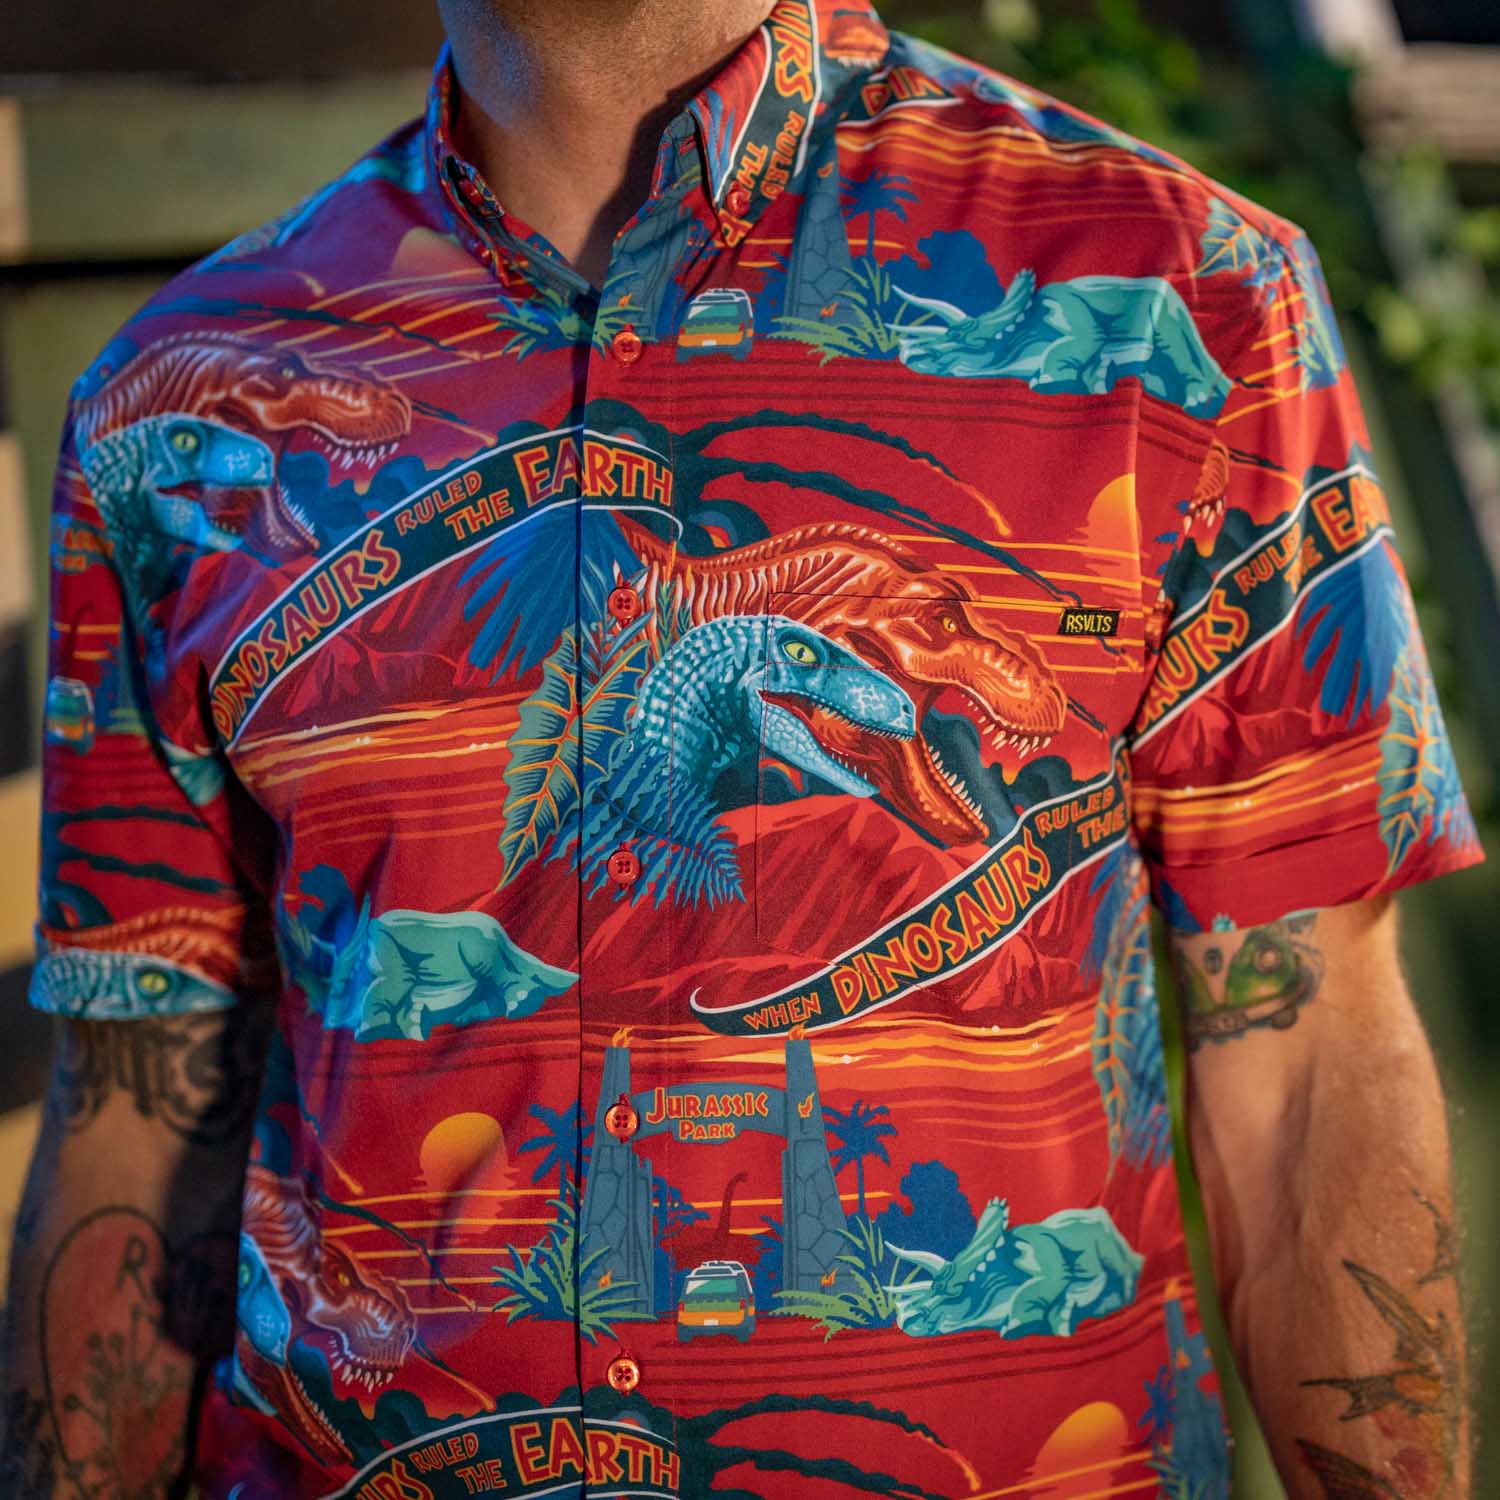 wearing an unbuttoned Hawaiian shirt - Playground